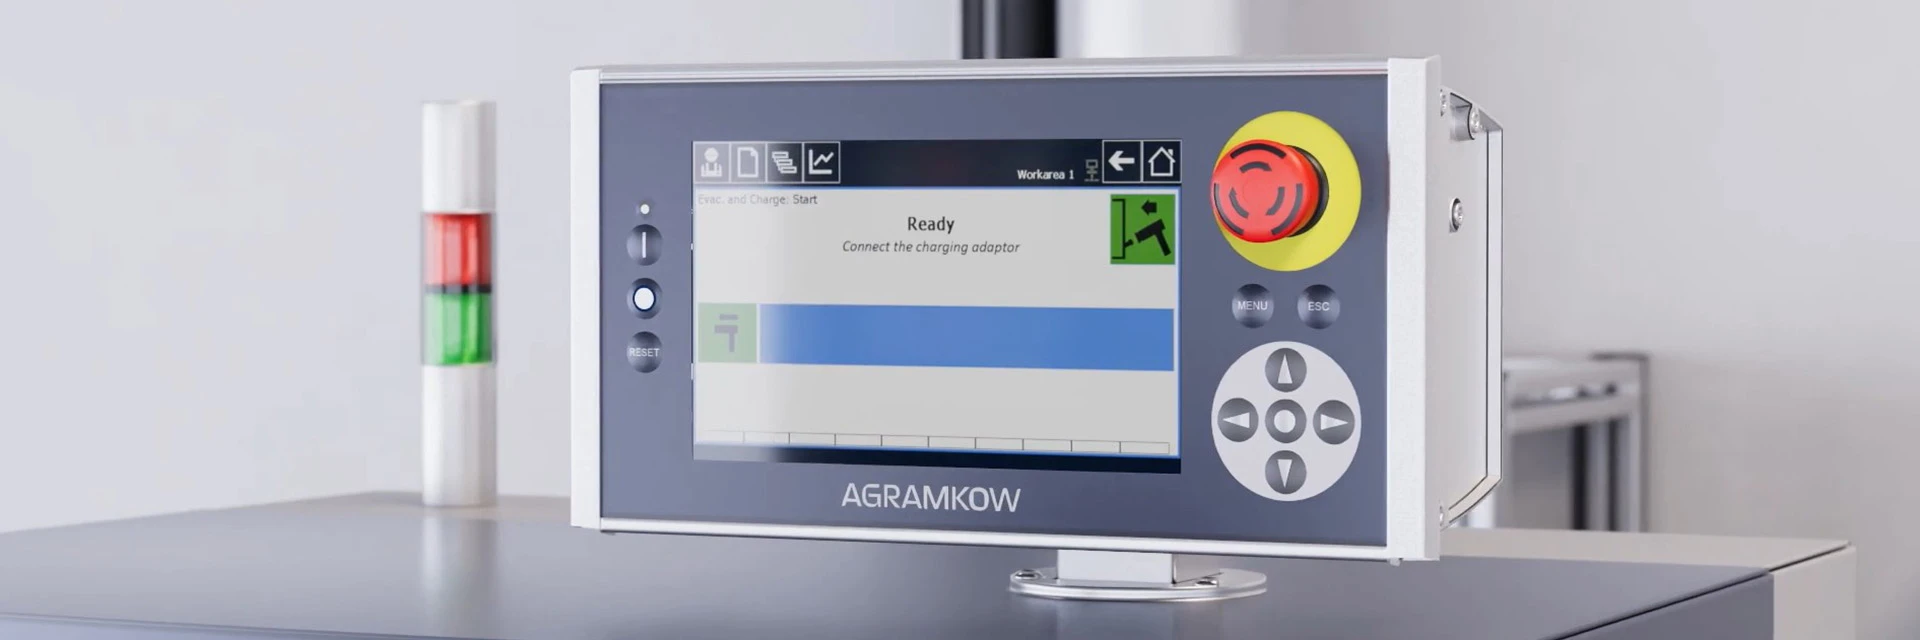 Agramkow refrigerant charging machine display